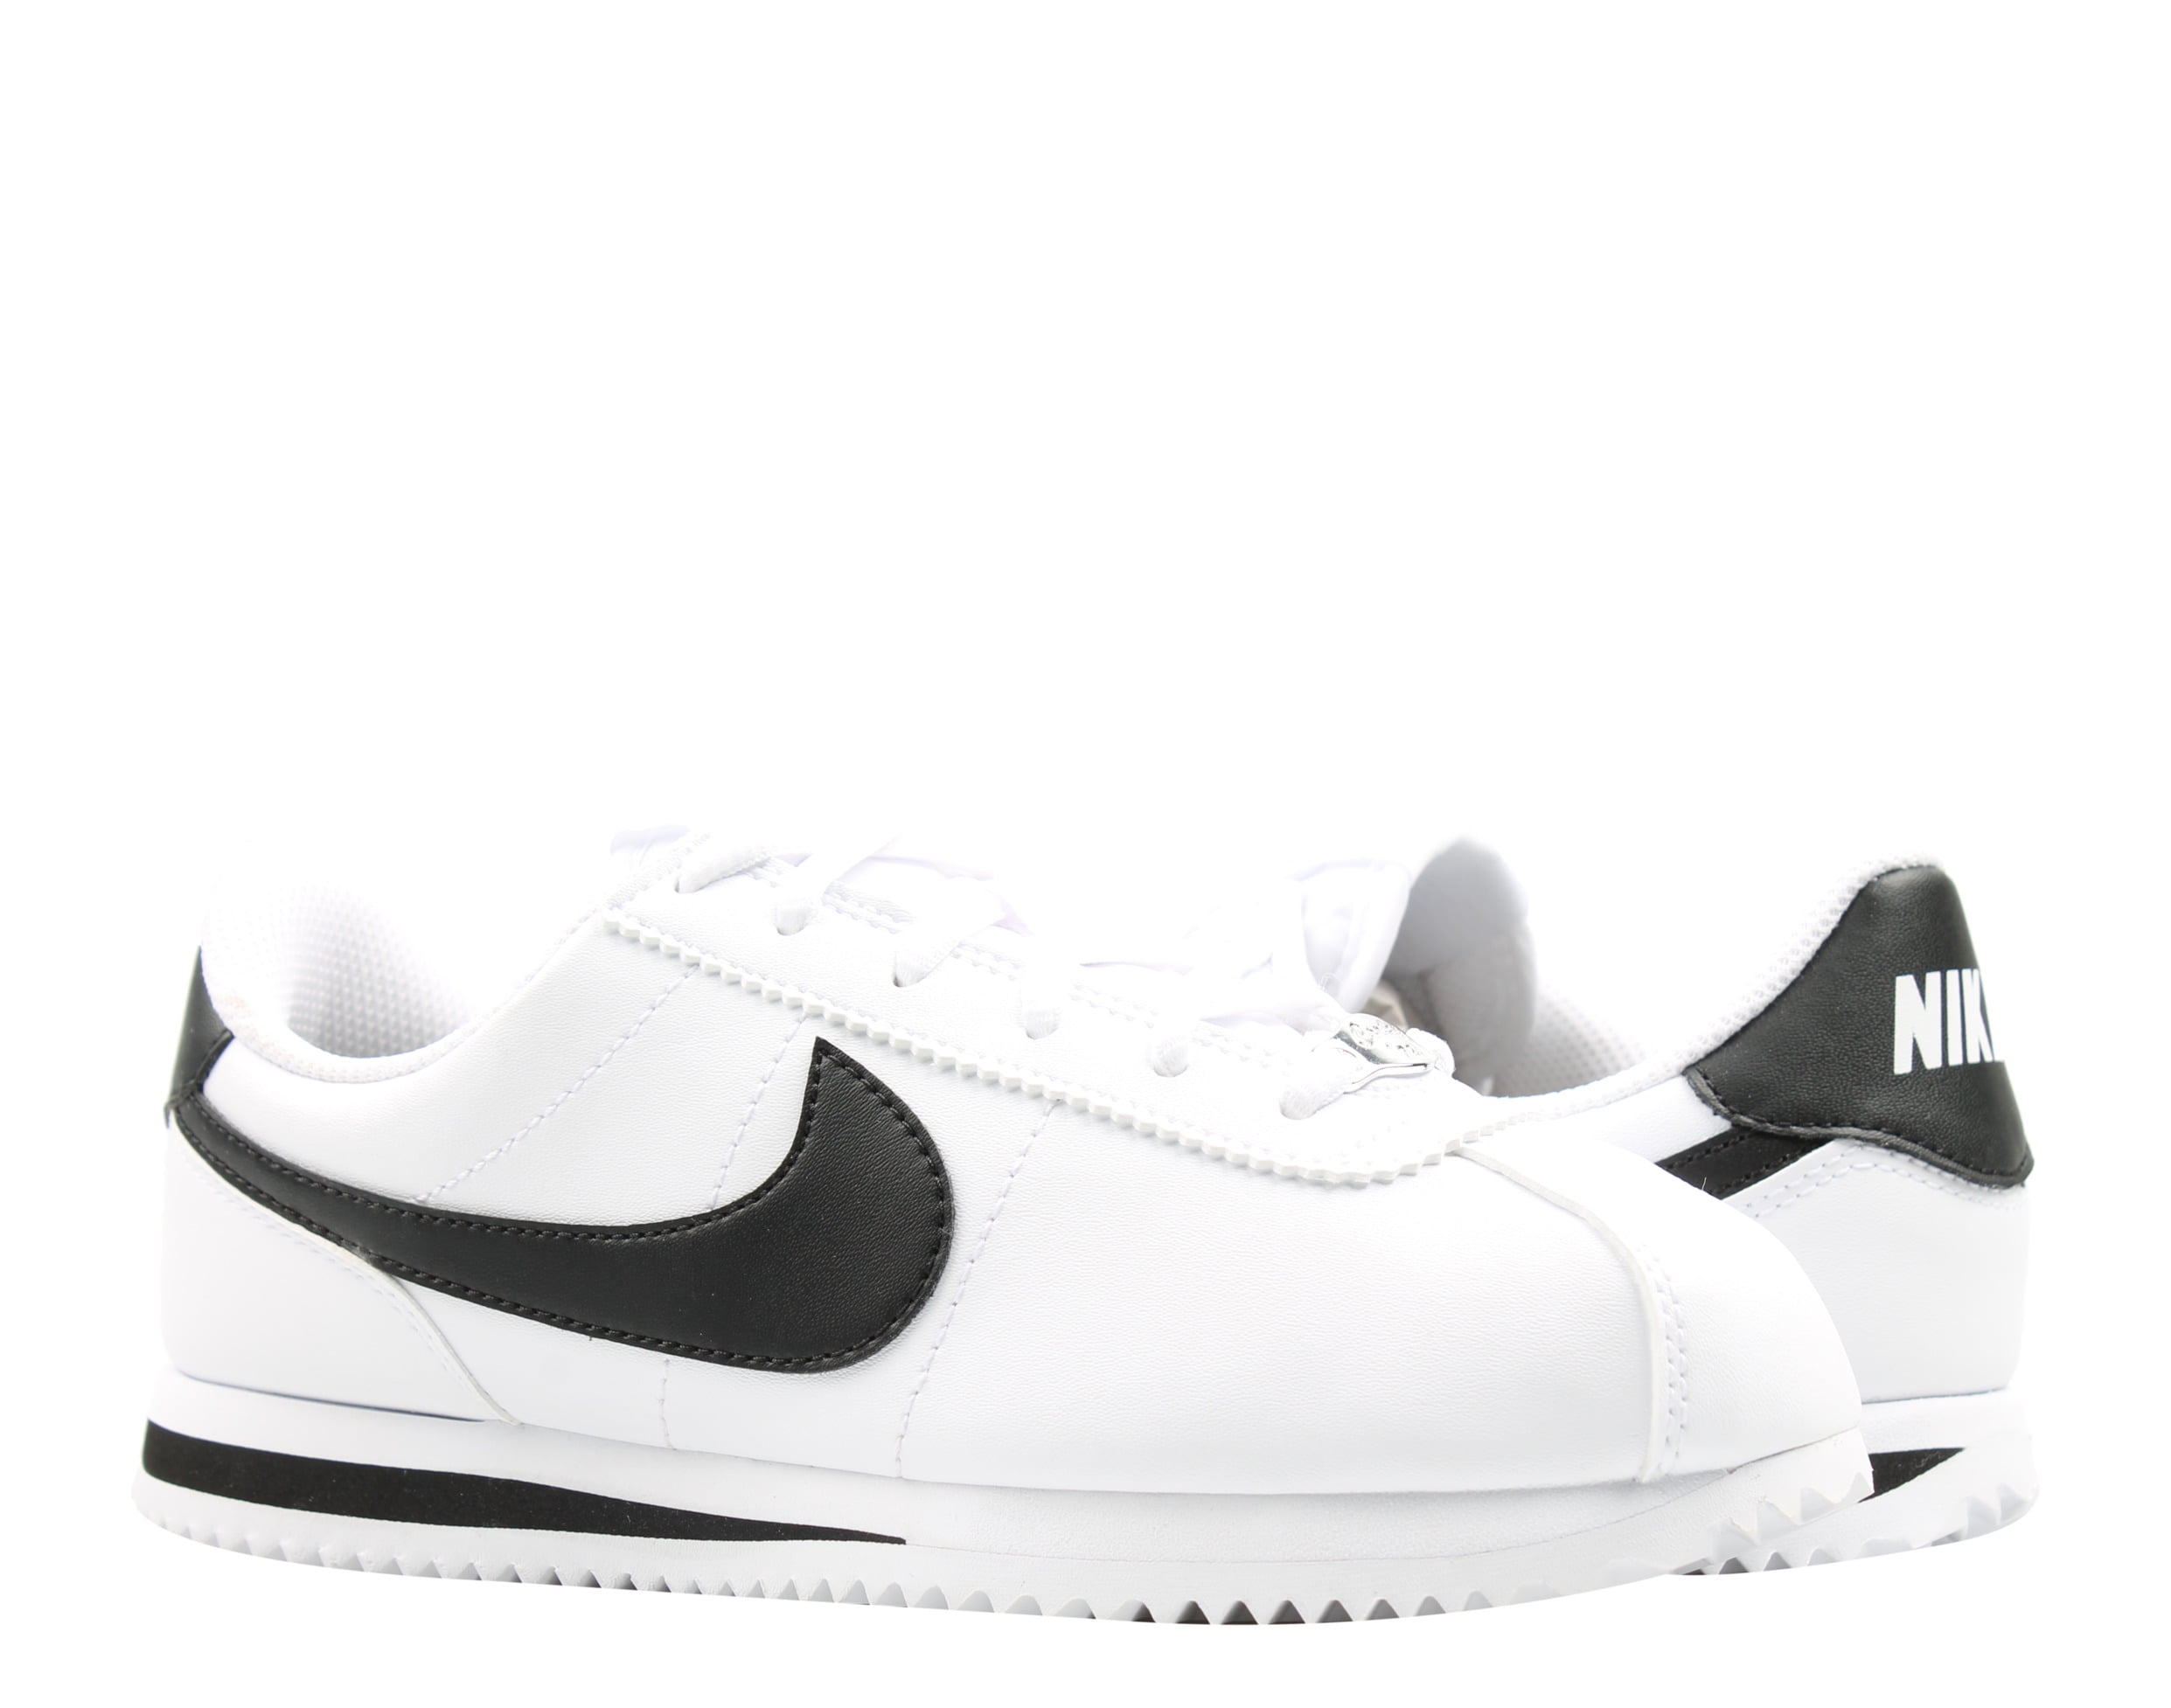 Big Kid's Nike Cortez Basic SL White/Black (904764 102) - 4.5